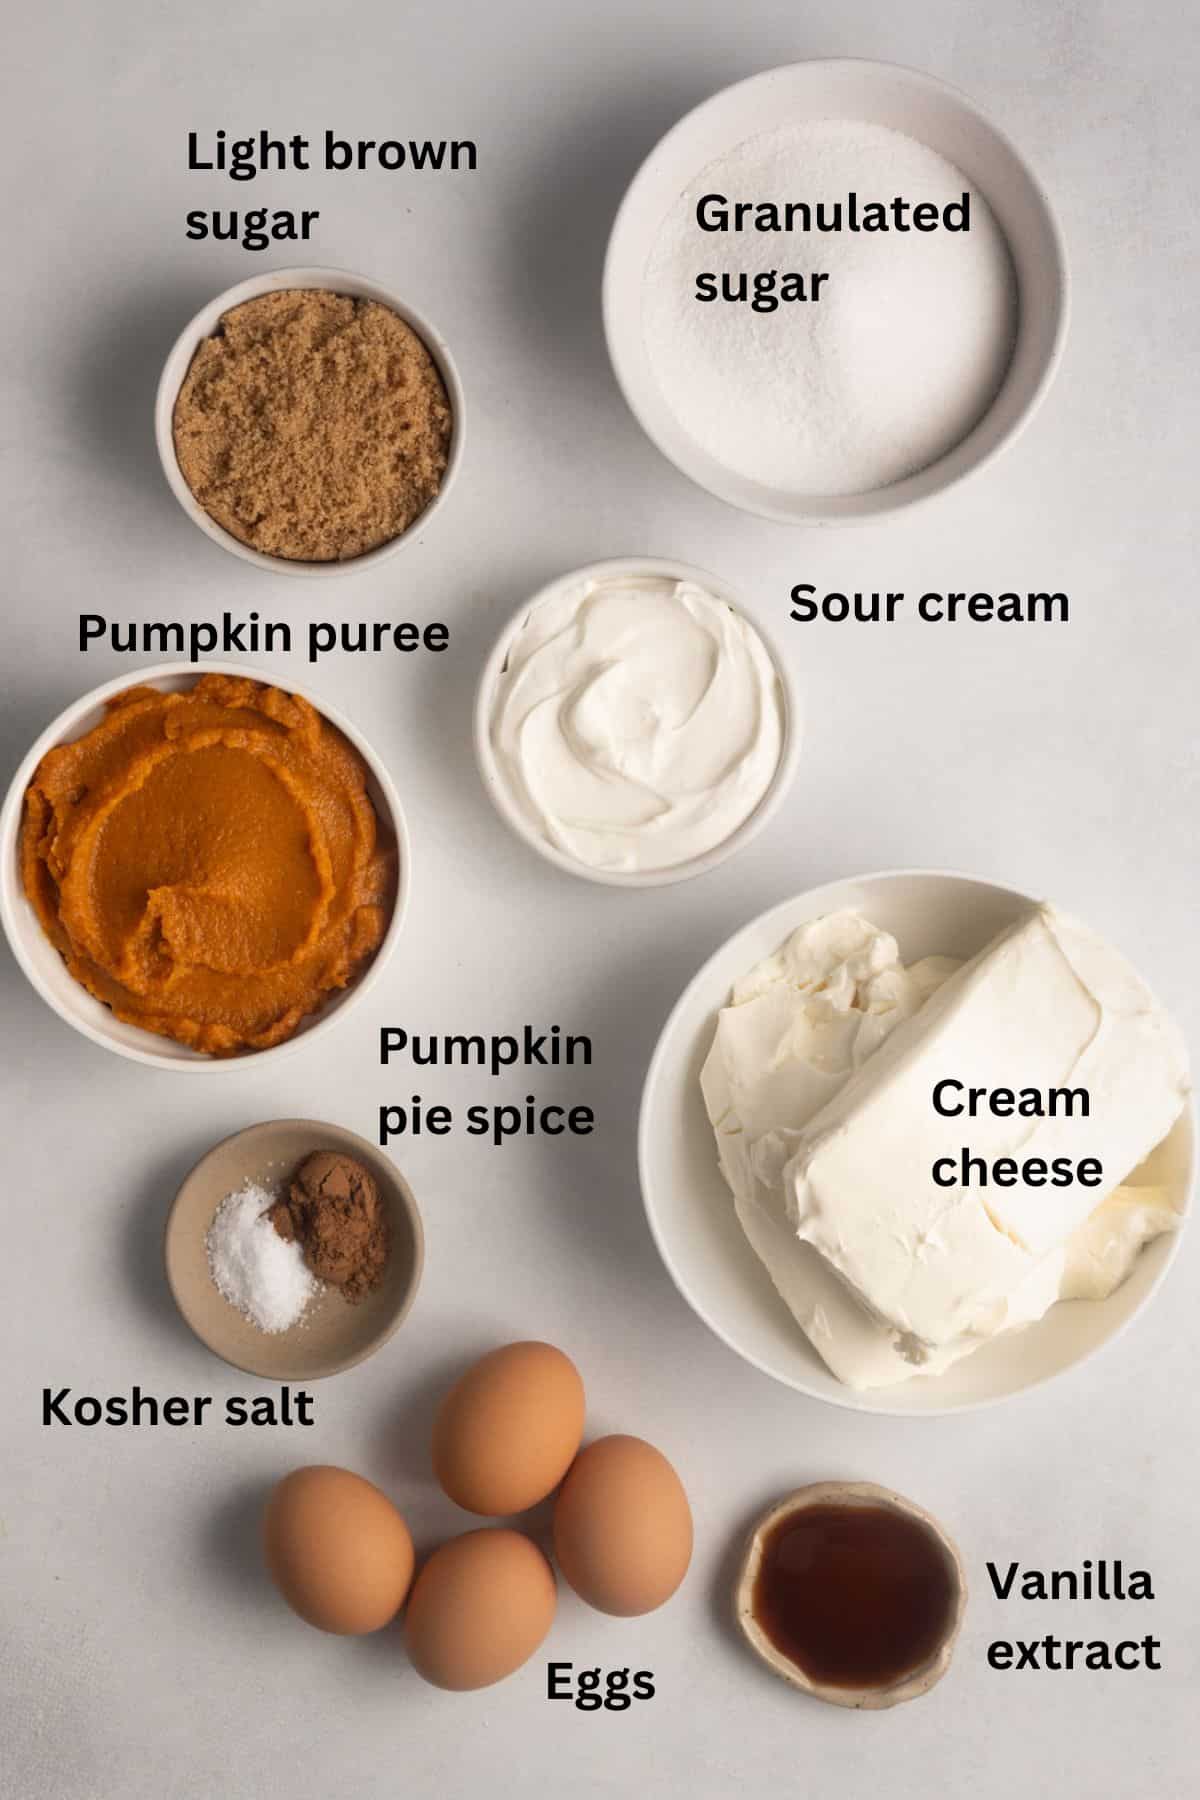 Image showing ingredients for gluten free pumpkin cheesecake. The ingredients shown are granulated sugar, light brown sugar, sour cream, pumpkin puree, cream cheese, pumpkin pie spice, Kosher salt, eggs, and vanilla extract.